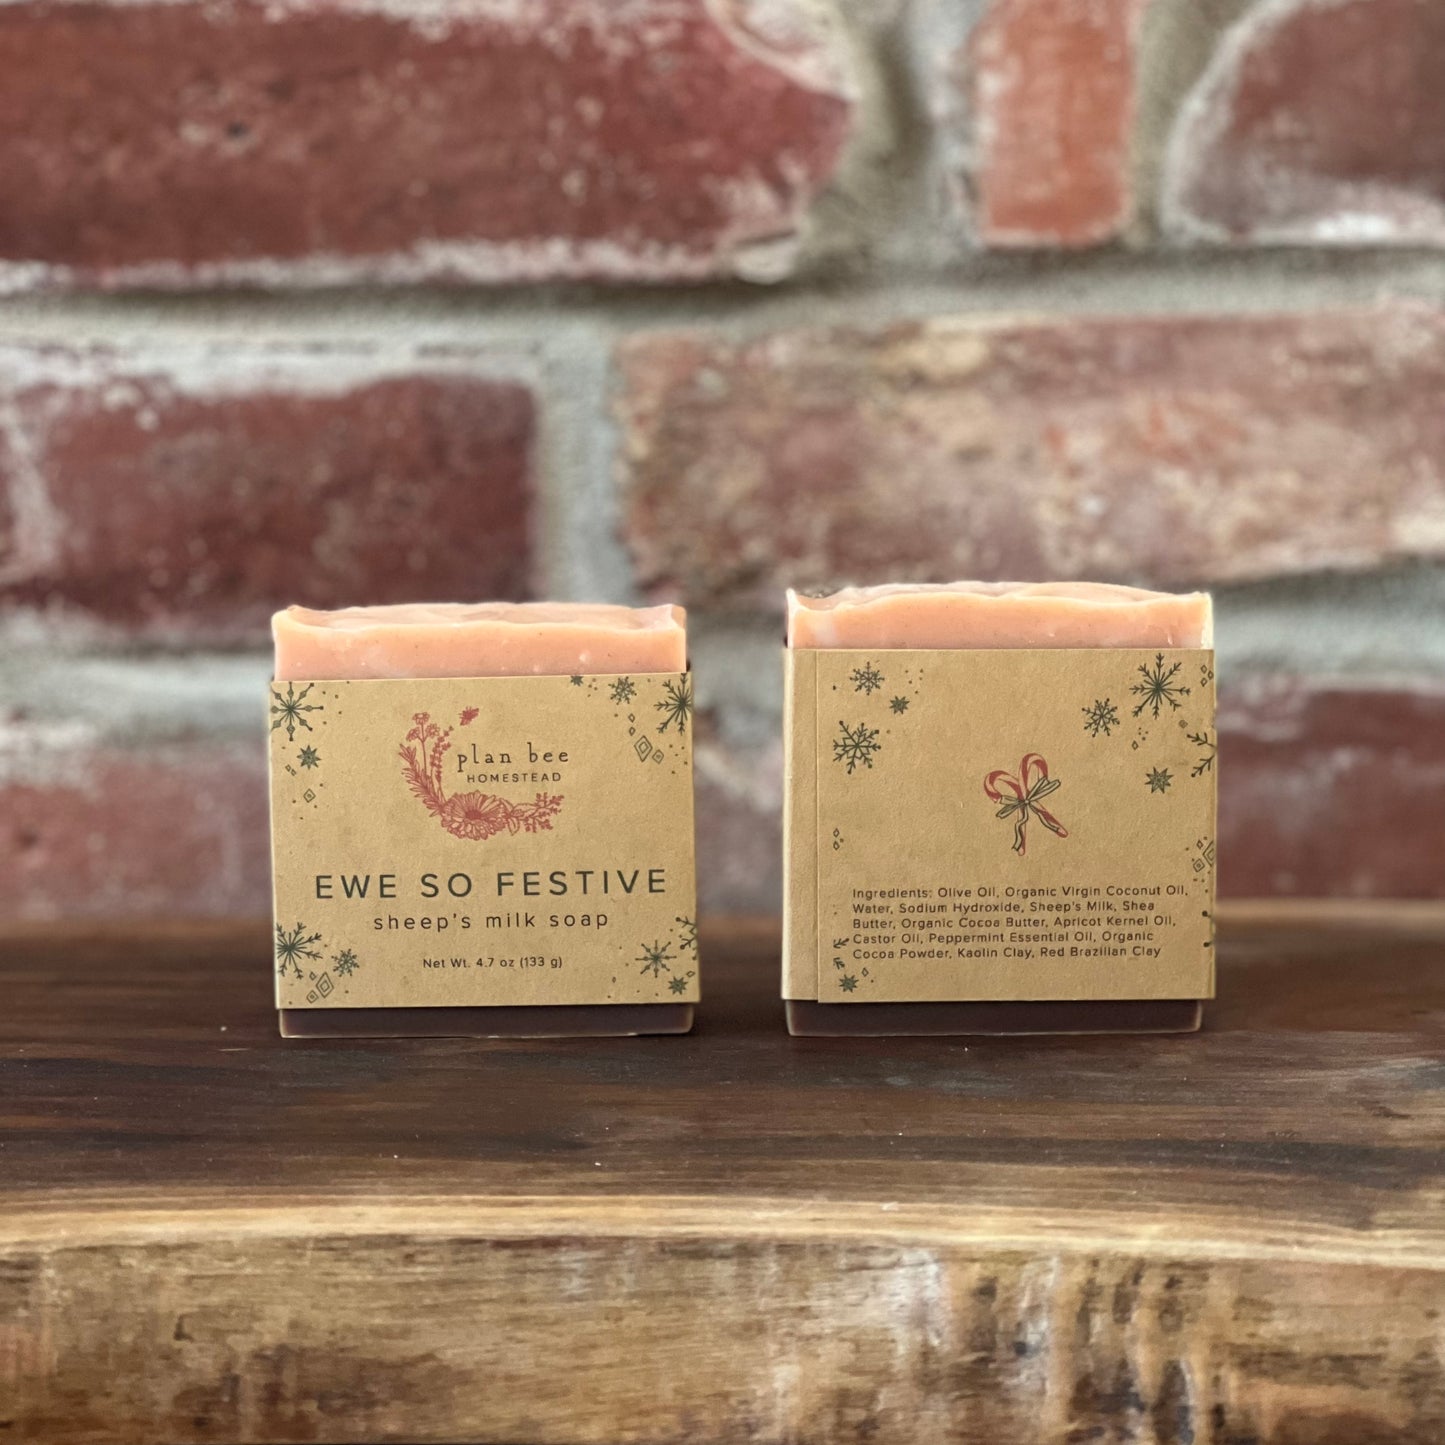 Ewe So Festive - Limited Edition Peppermint Mocha Sheep's Milk Soap